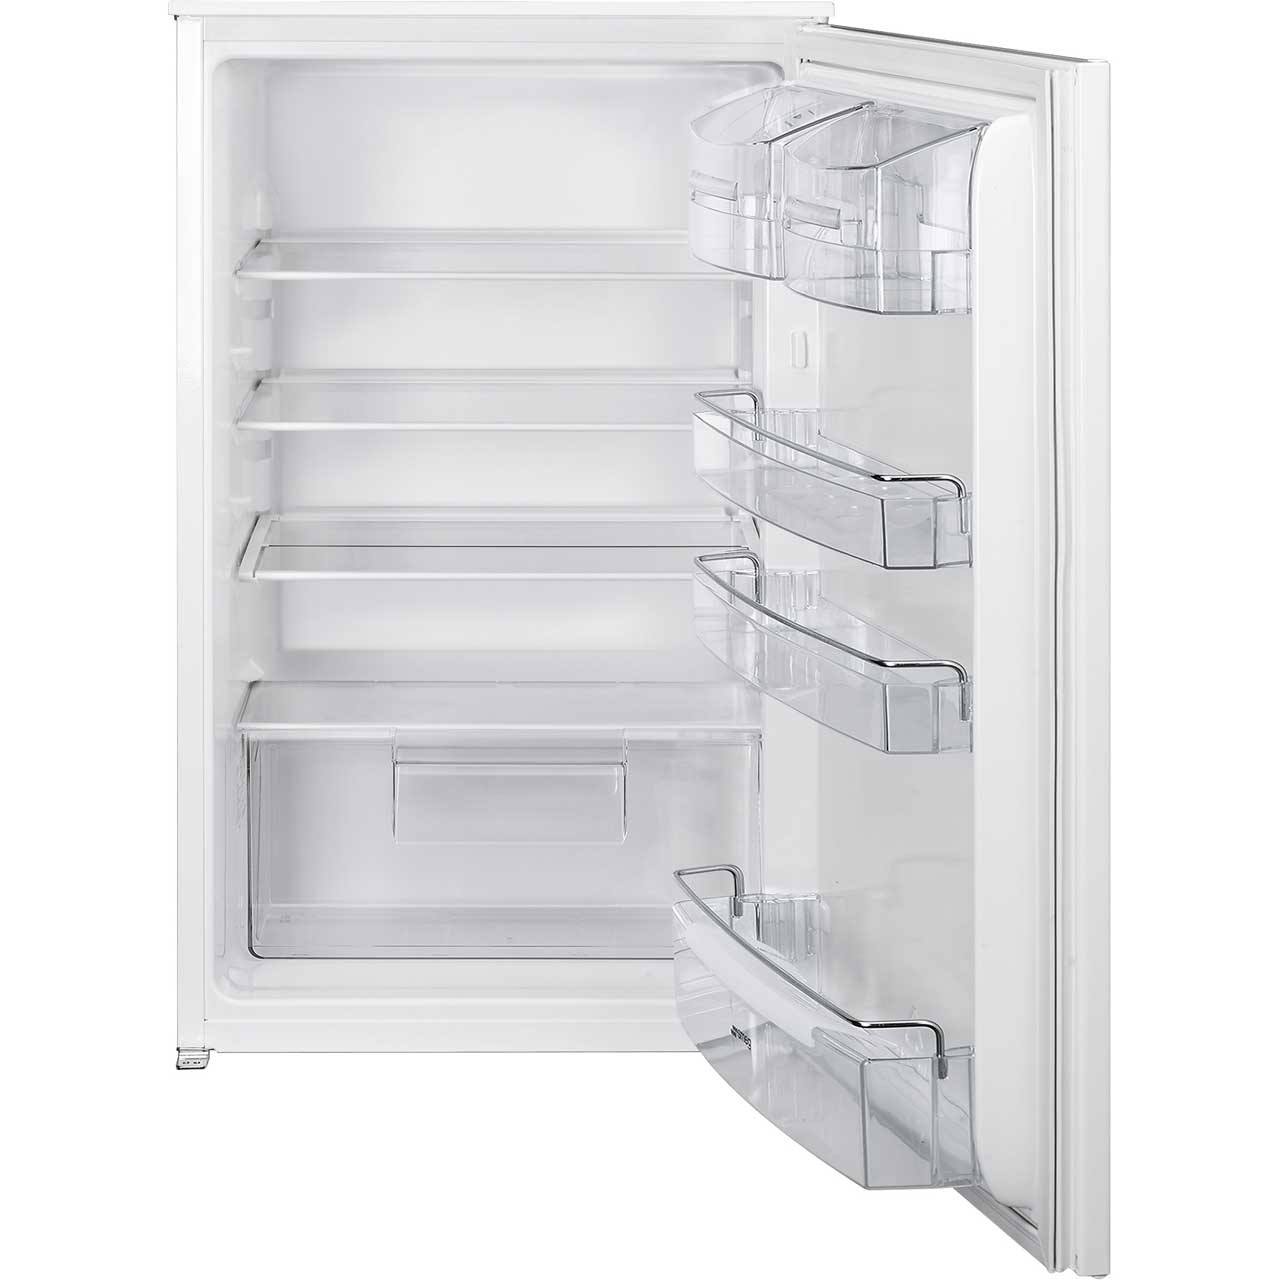 Integrated larder fridge | Shop for cheap Fridges and Save online